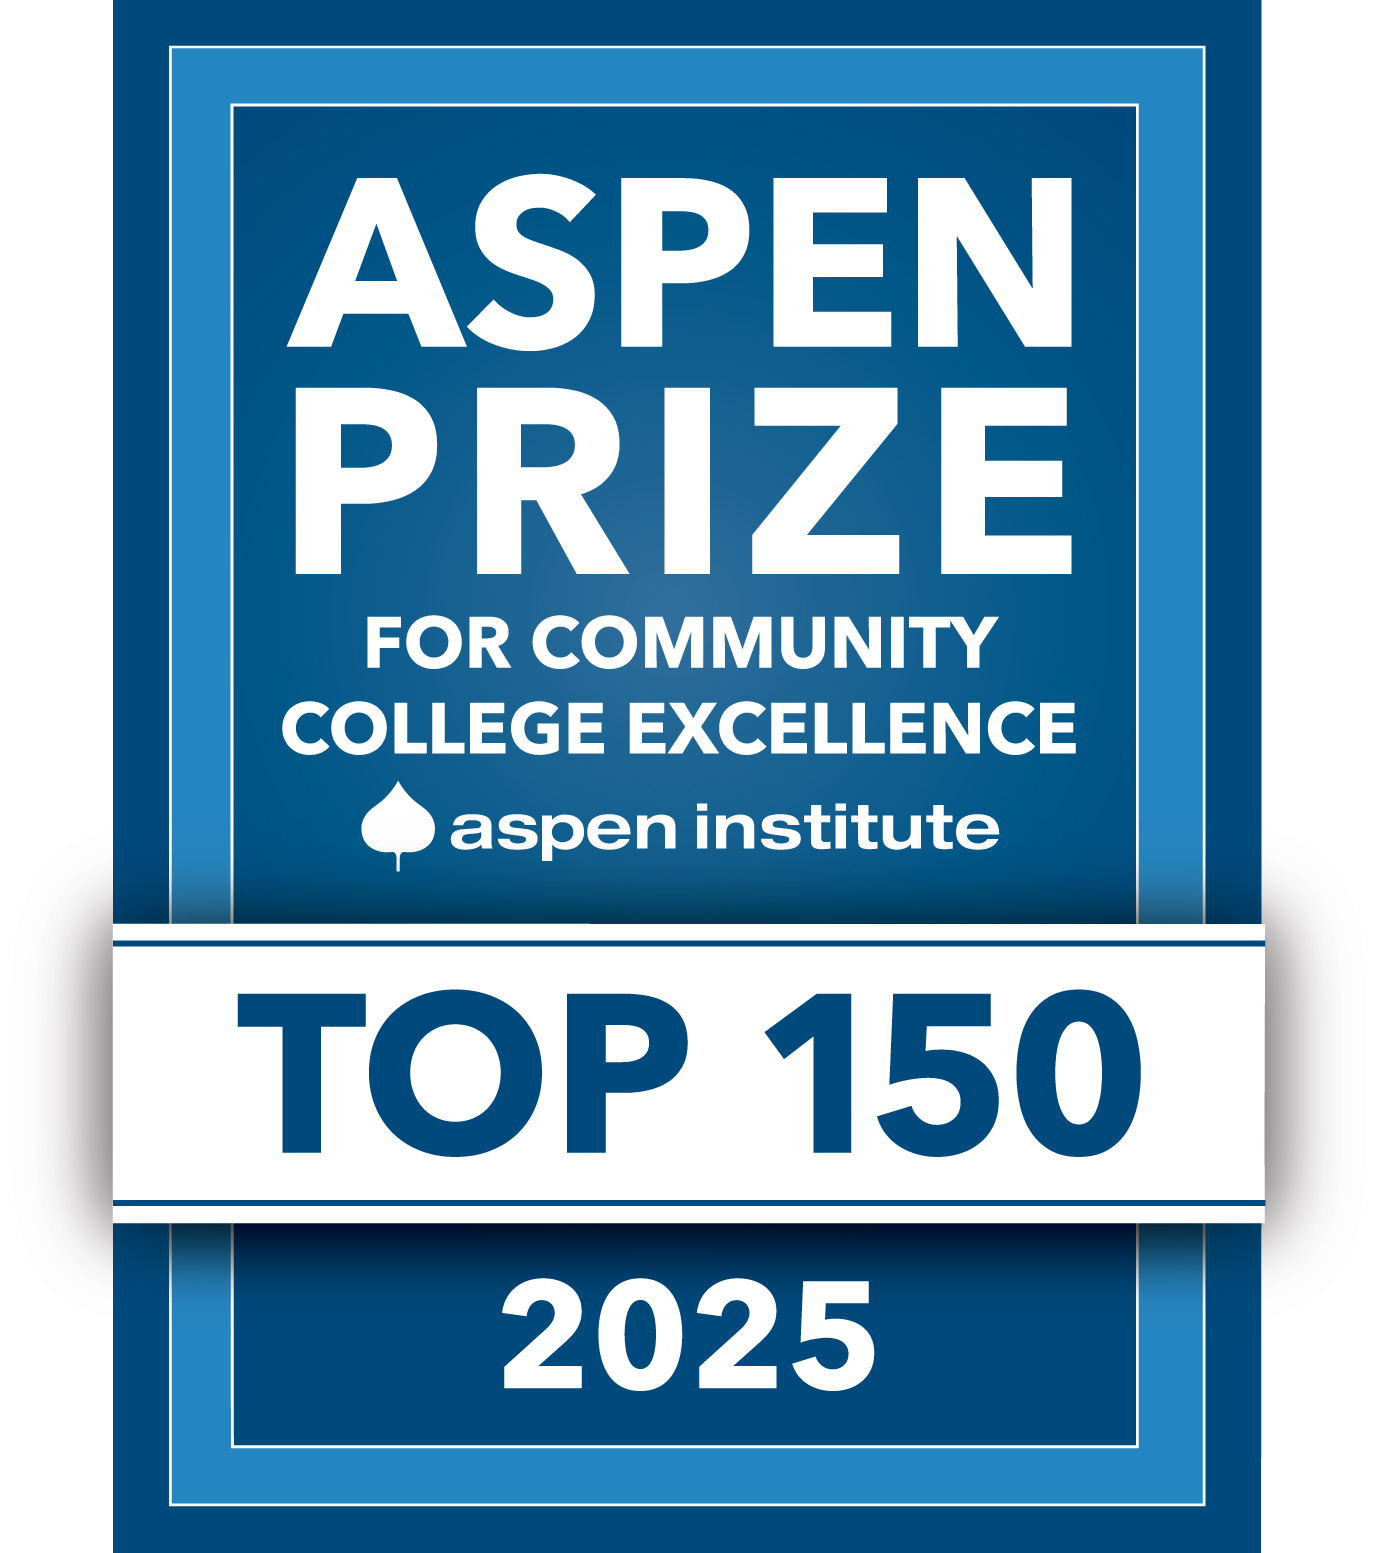 Aspen Prize Top 150 - 2025.